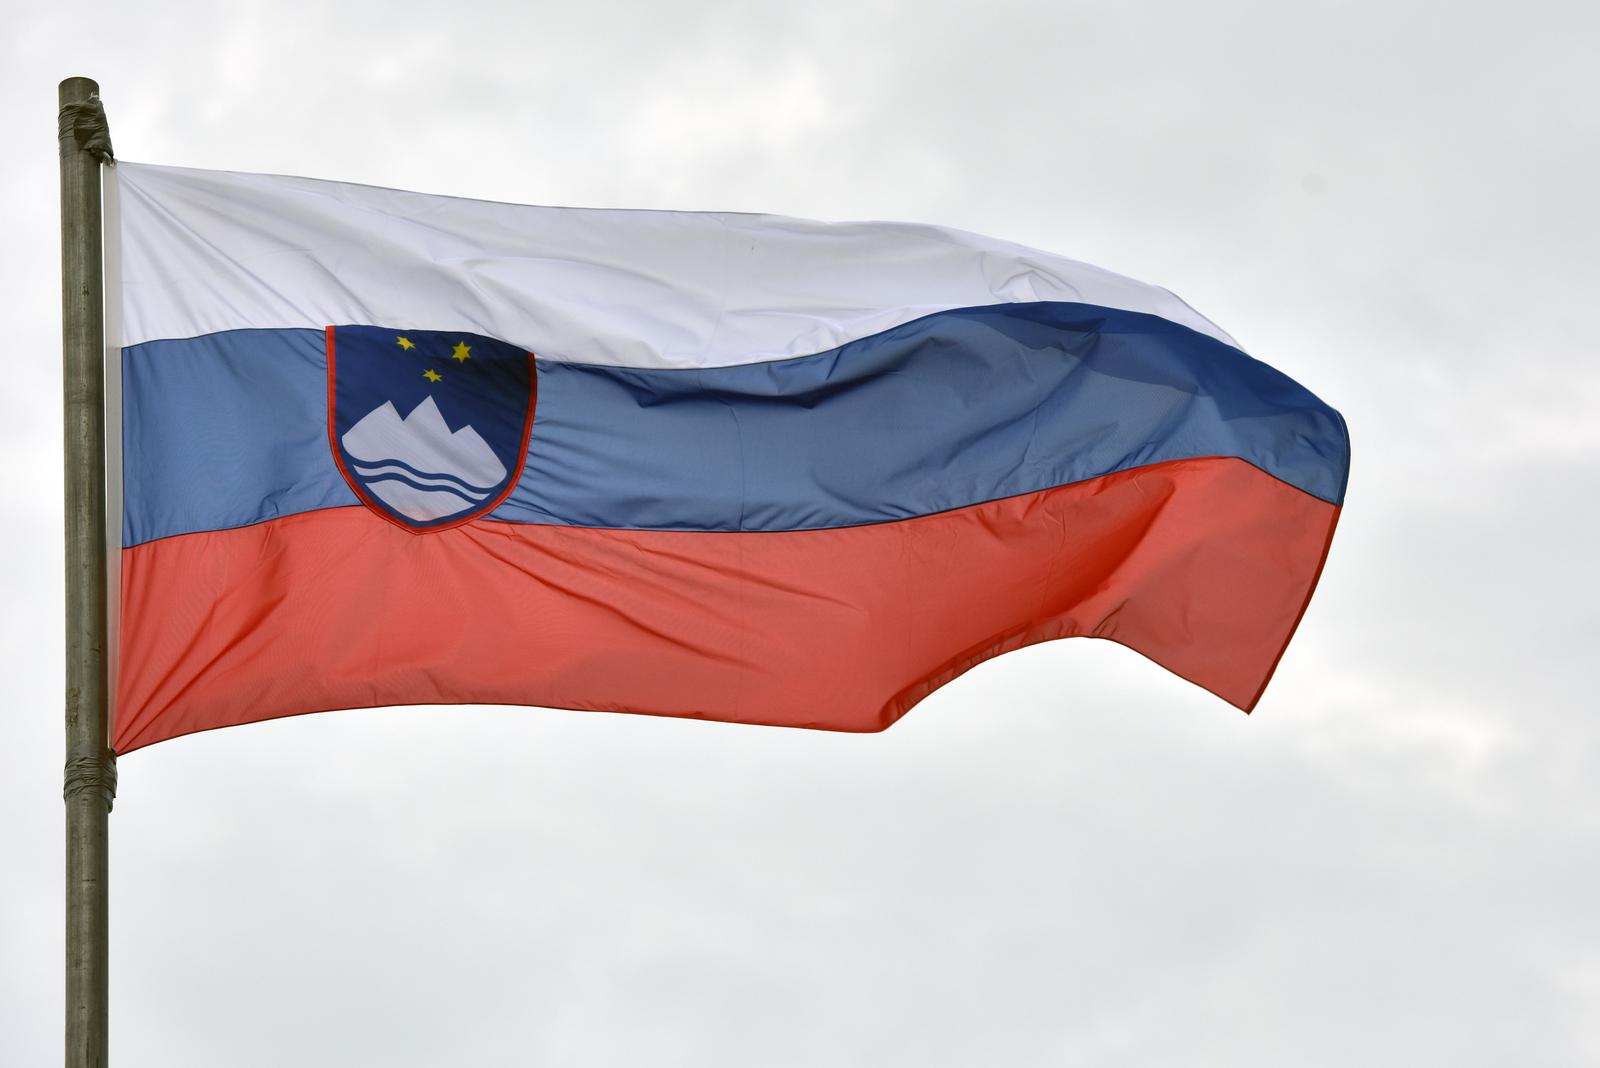 29.05.2019., Sibenik - Drzavna zastava Republike Slovenije.rPhoto: Hrvoje Jelavic/PIXSELL